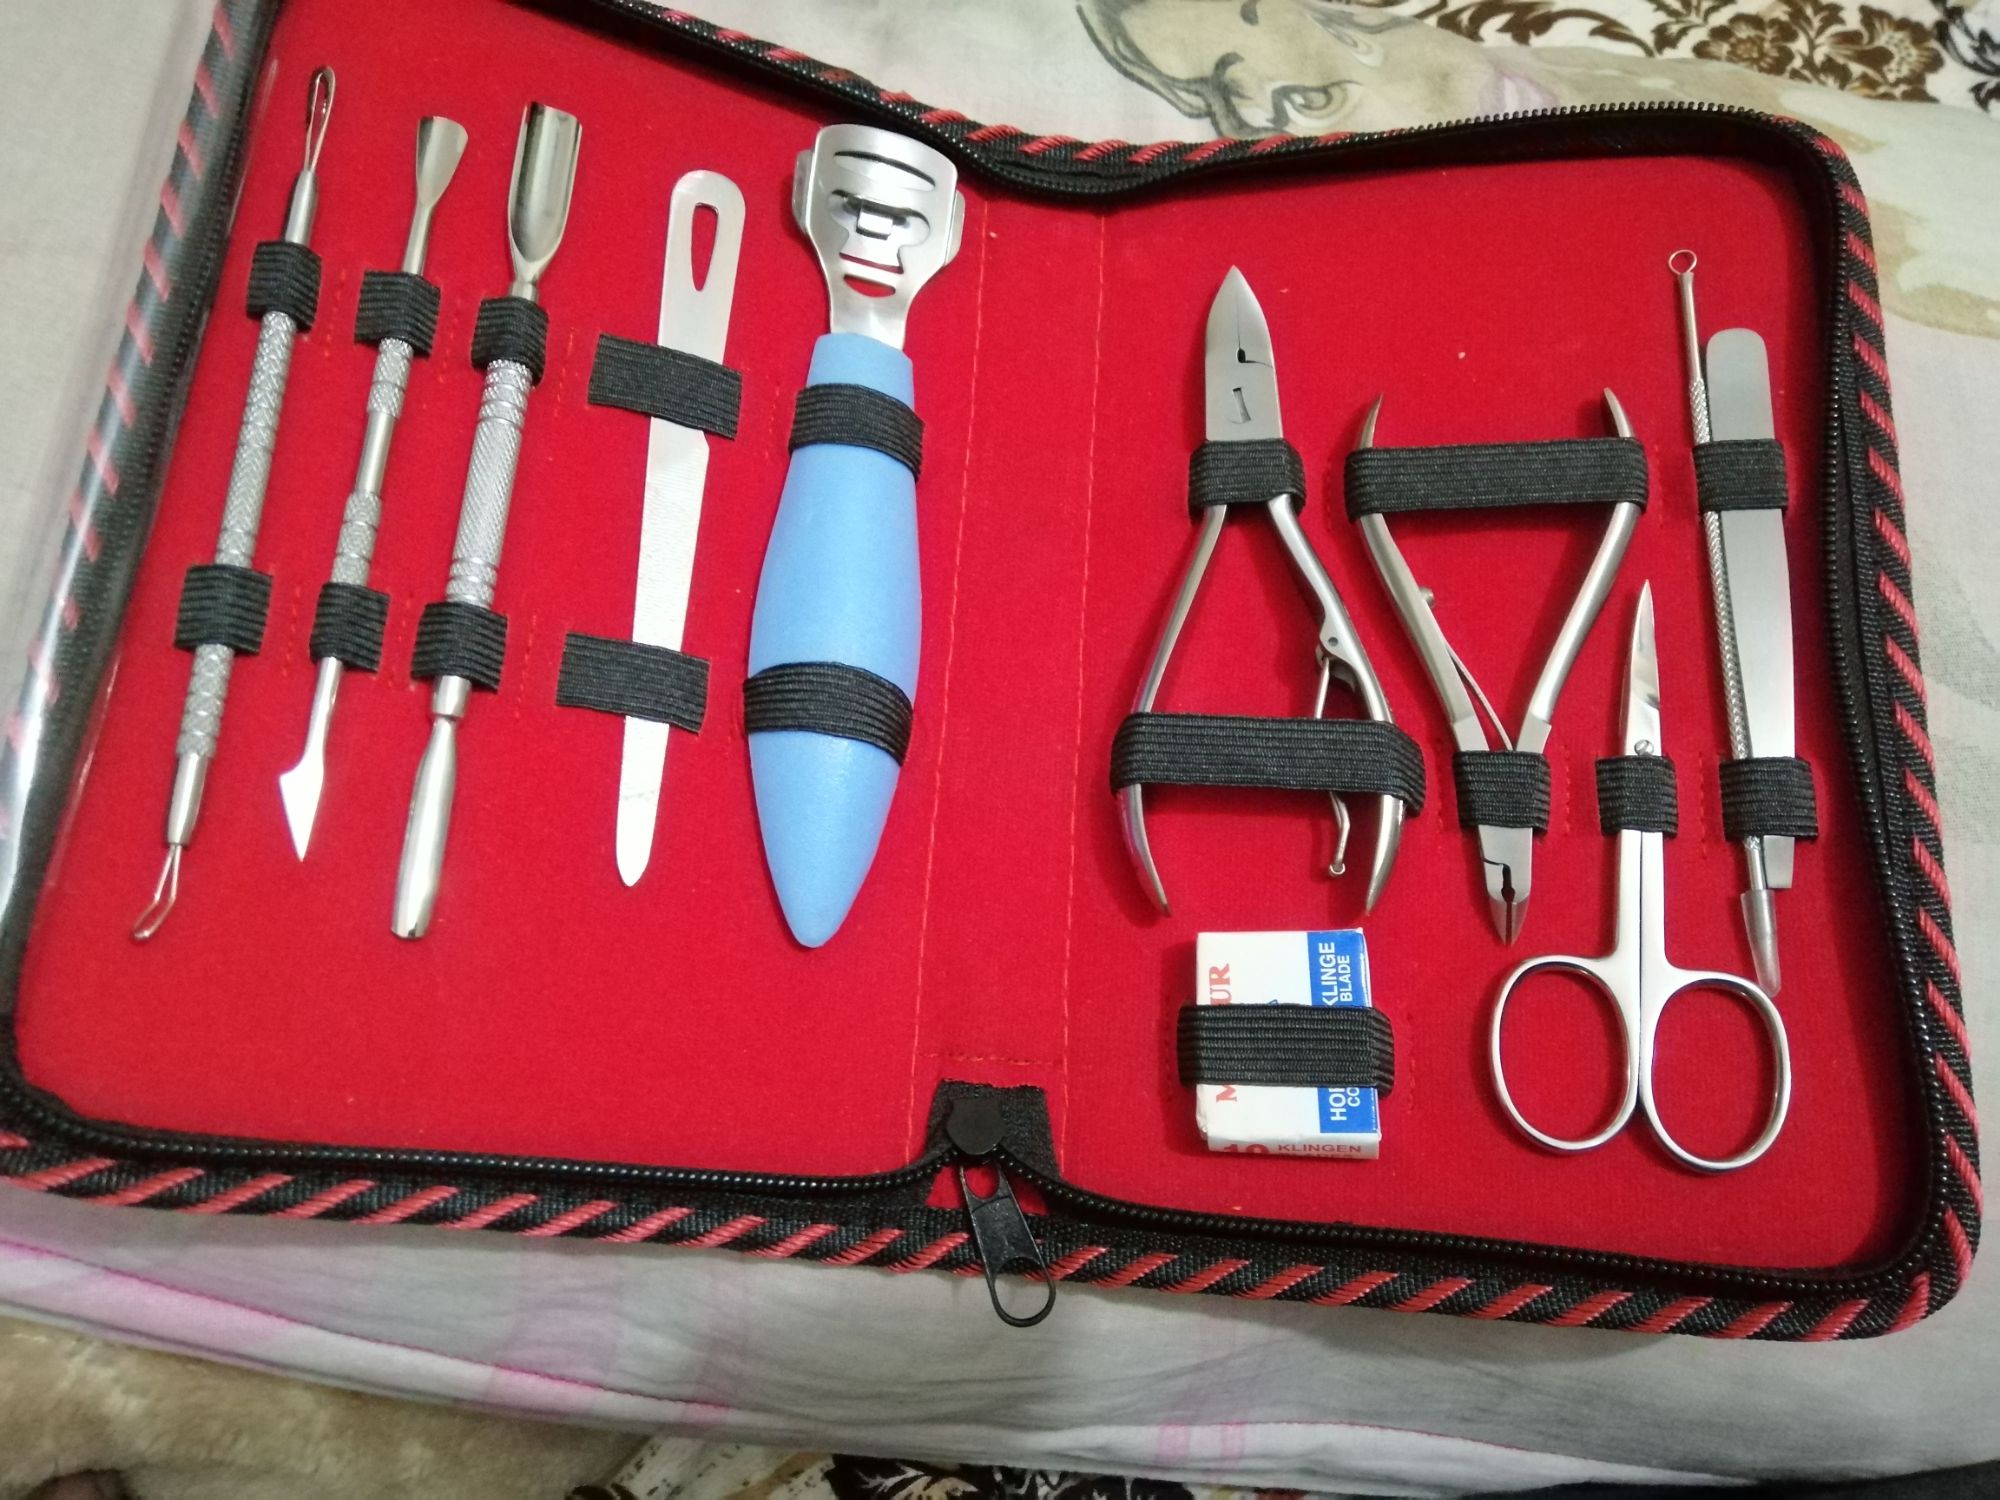 toenail grooming kit